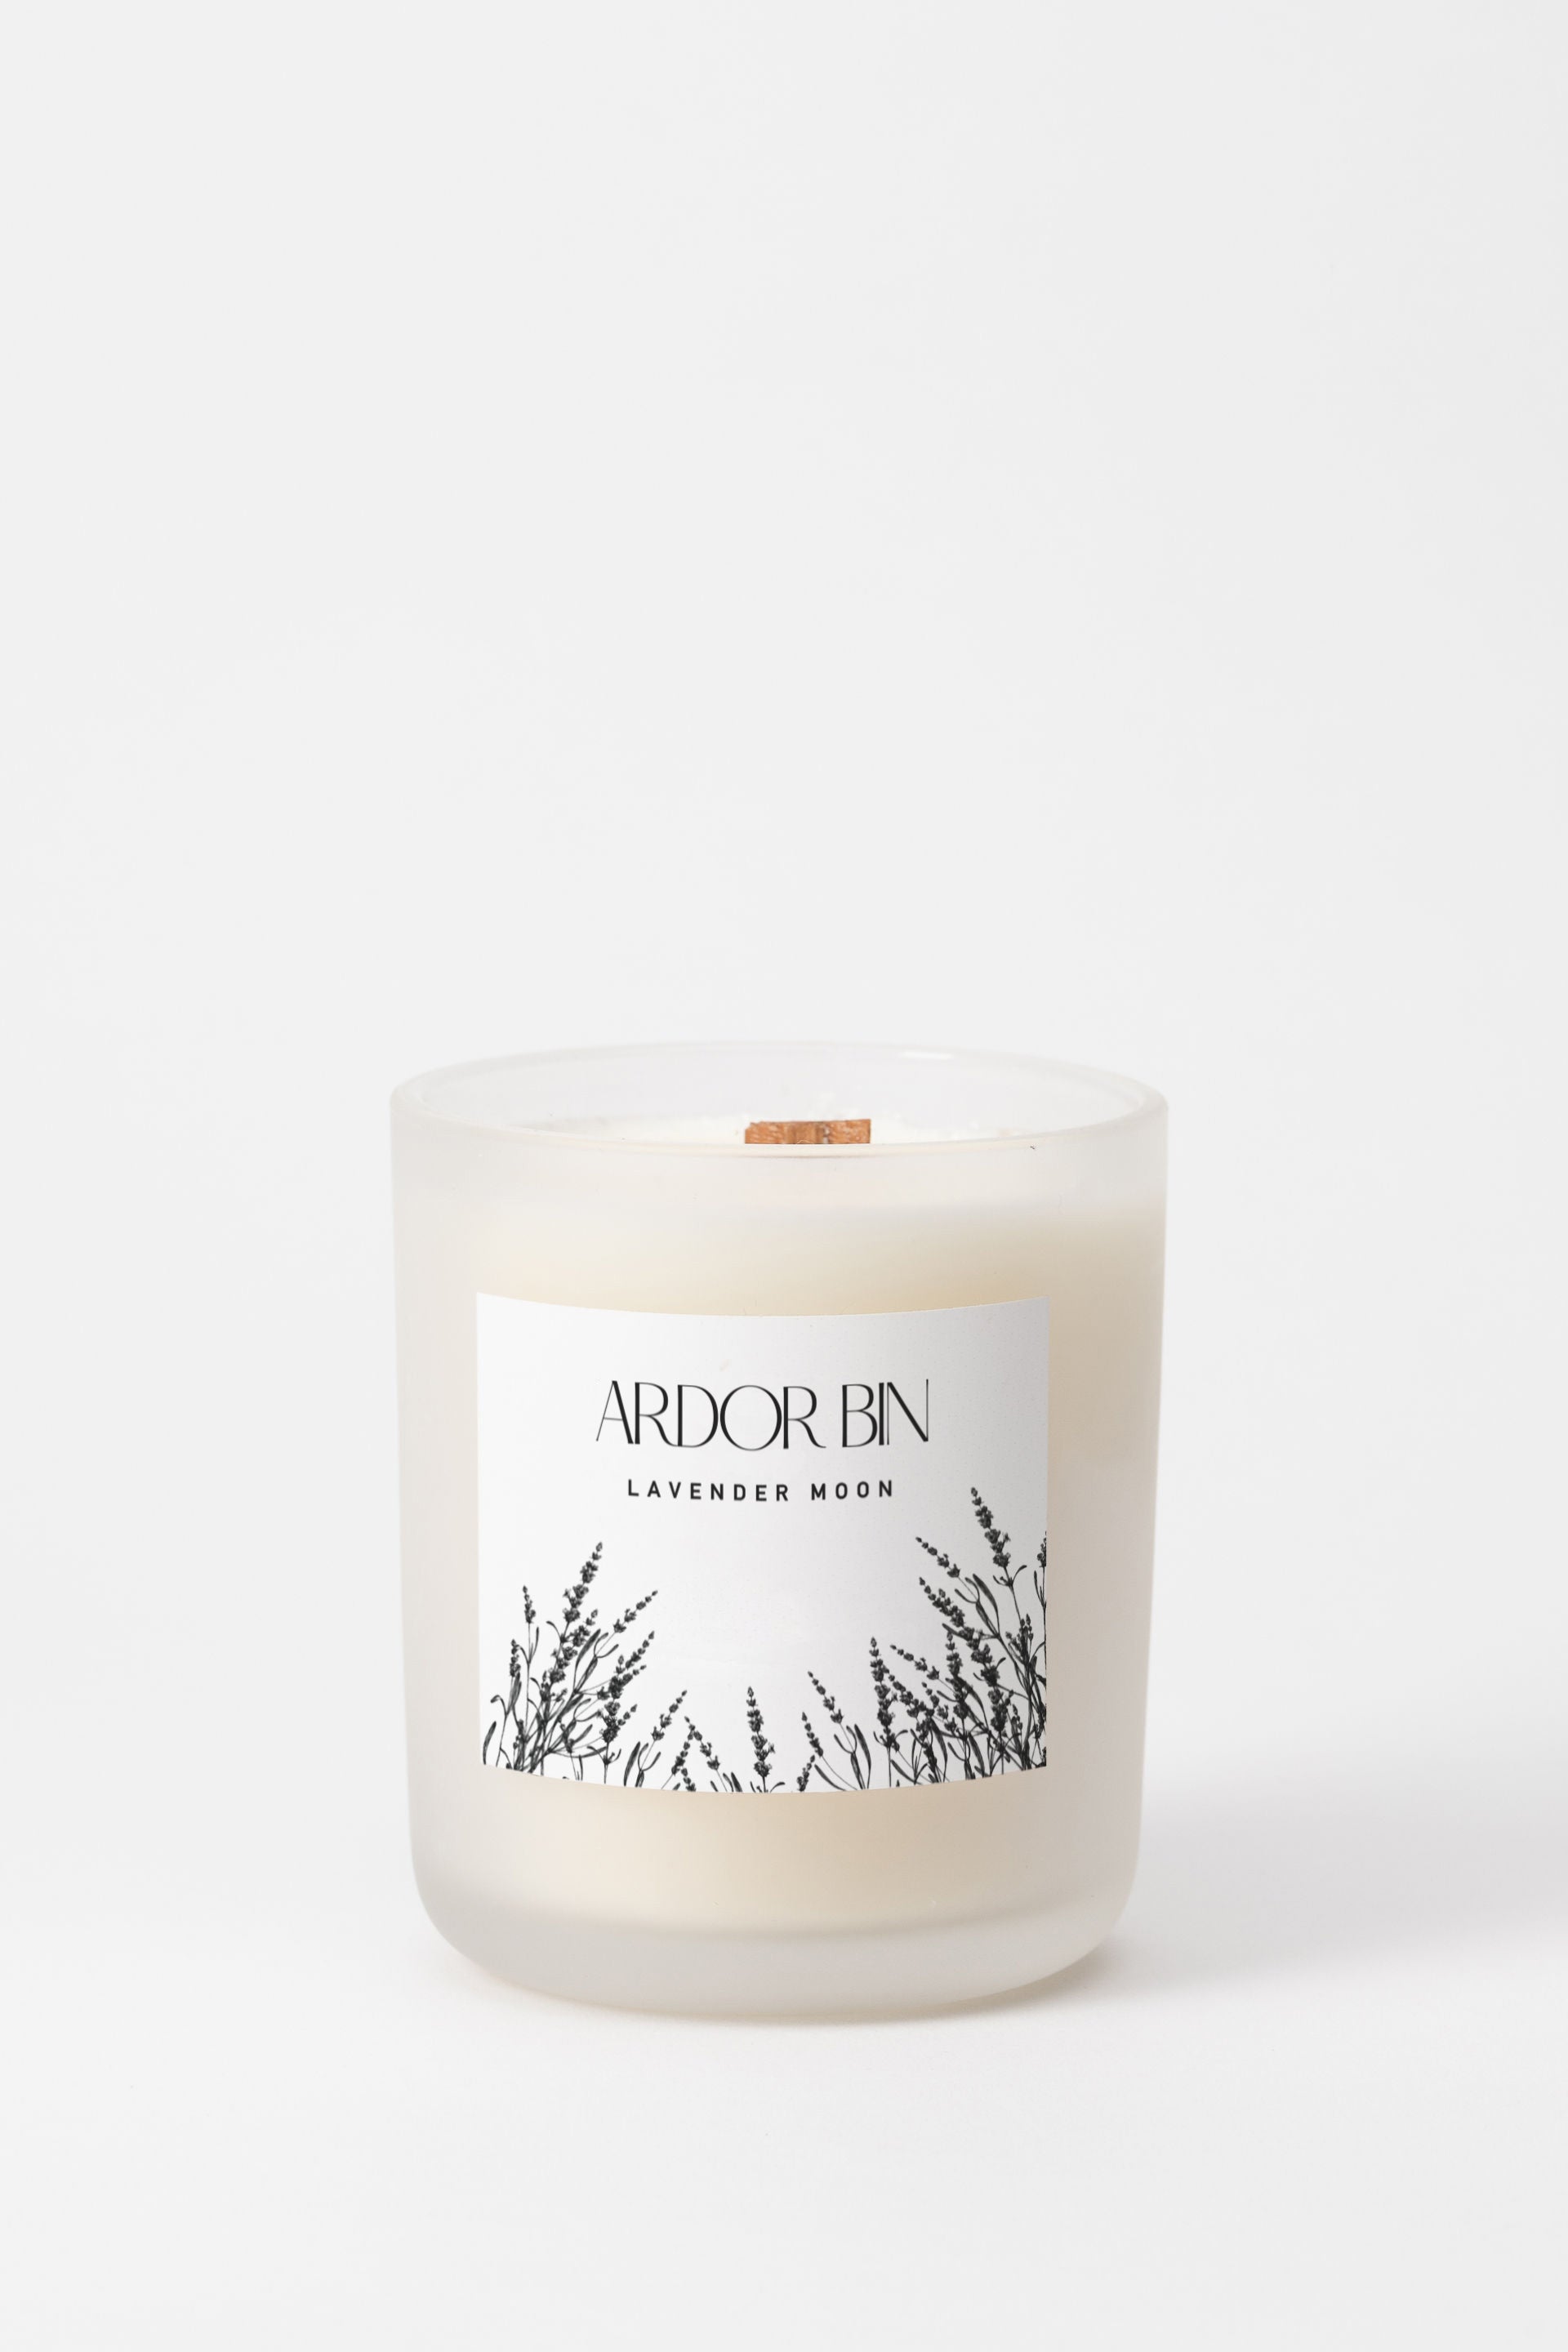 "Lavender Moon" Wood Wick Botanical Candle - Ardor Bin 